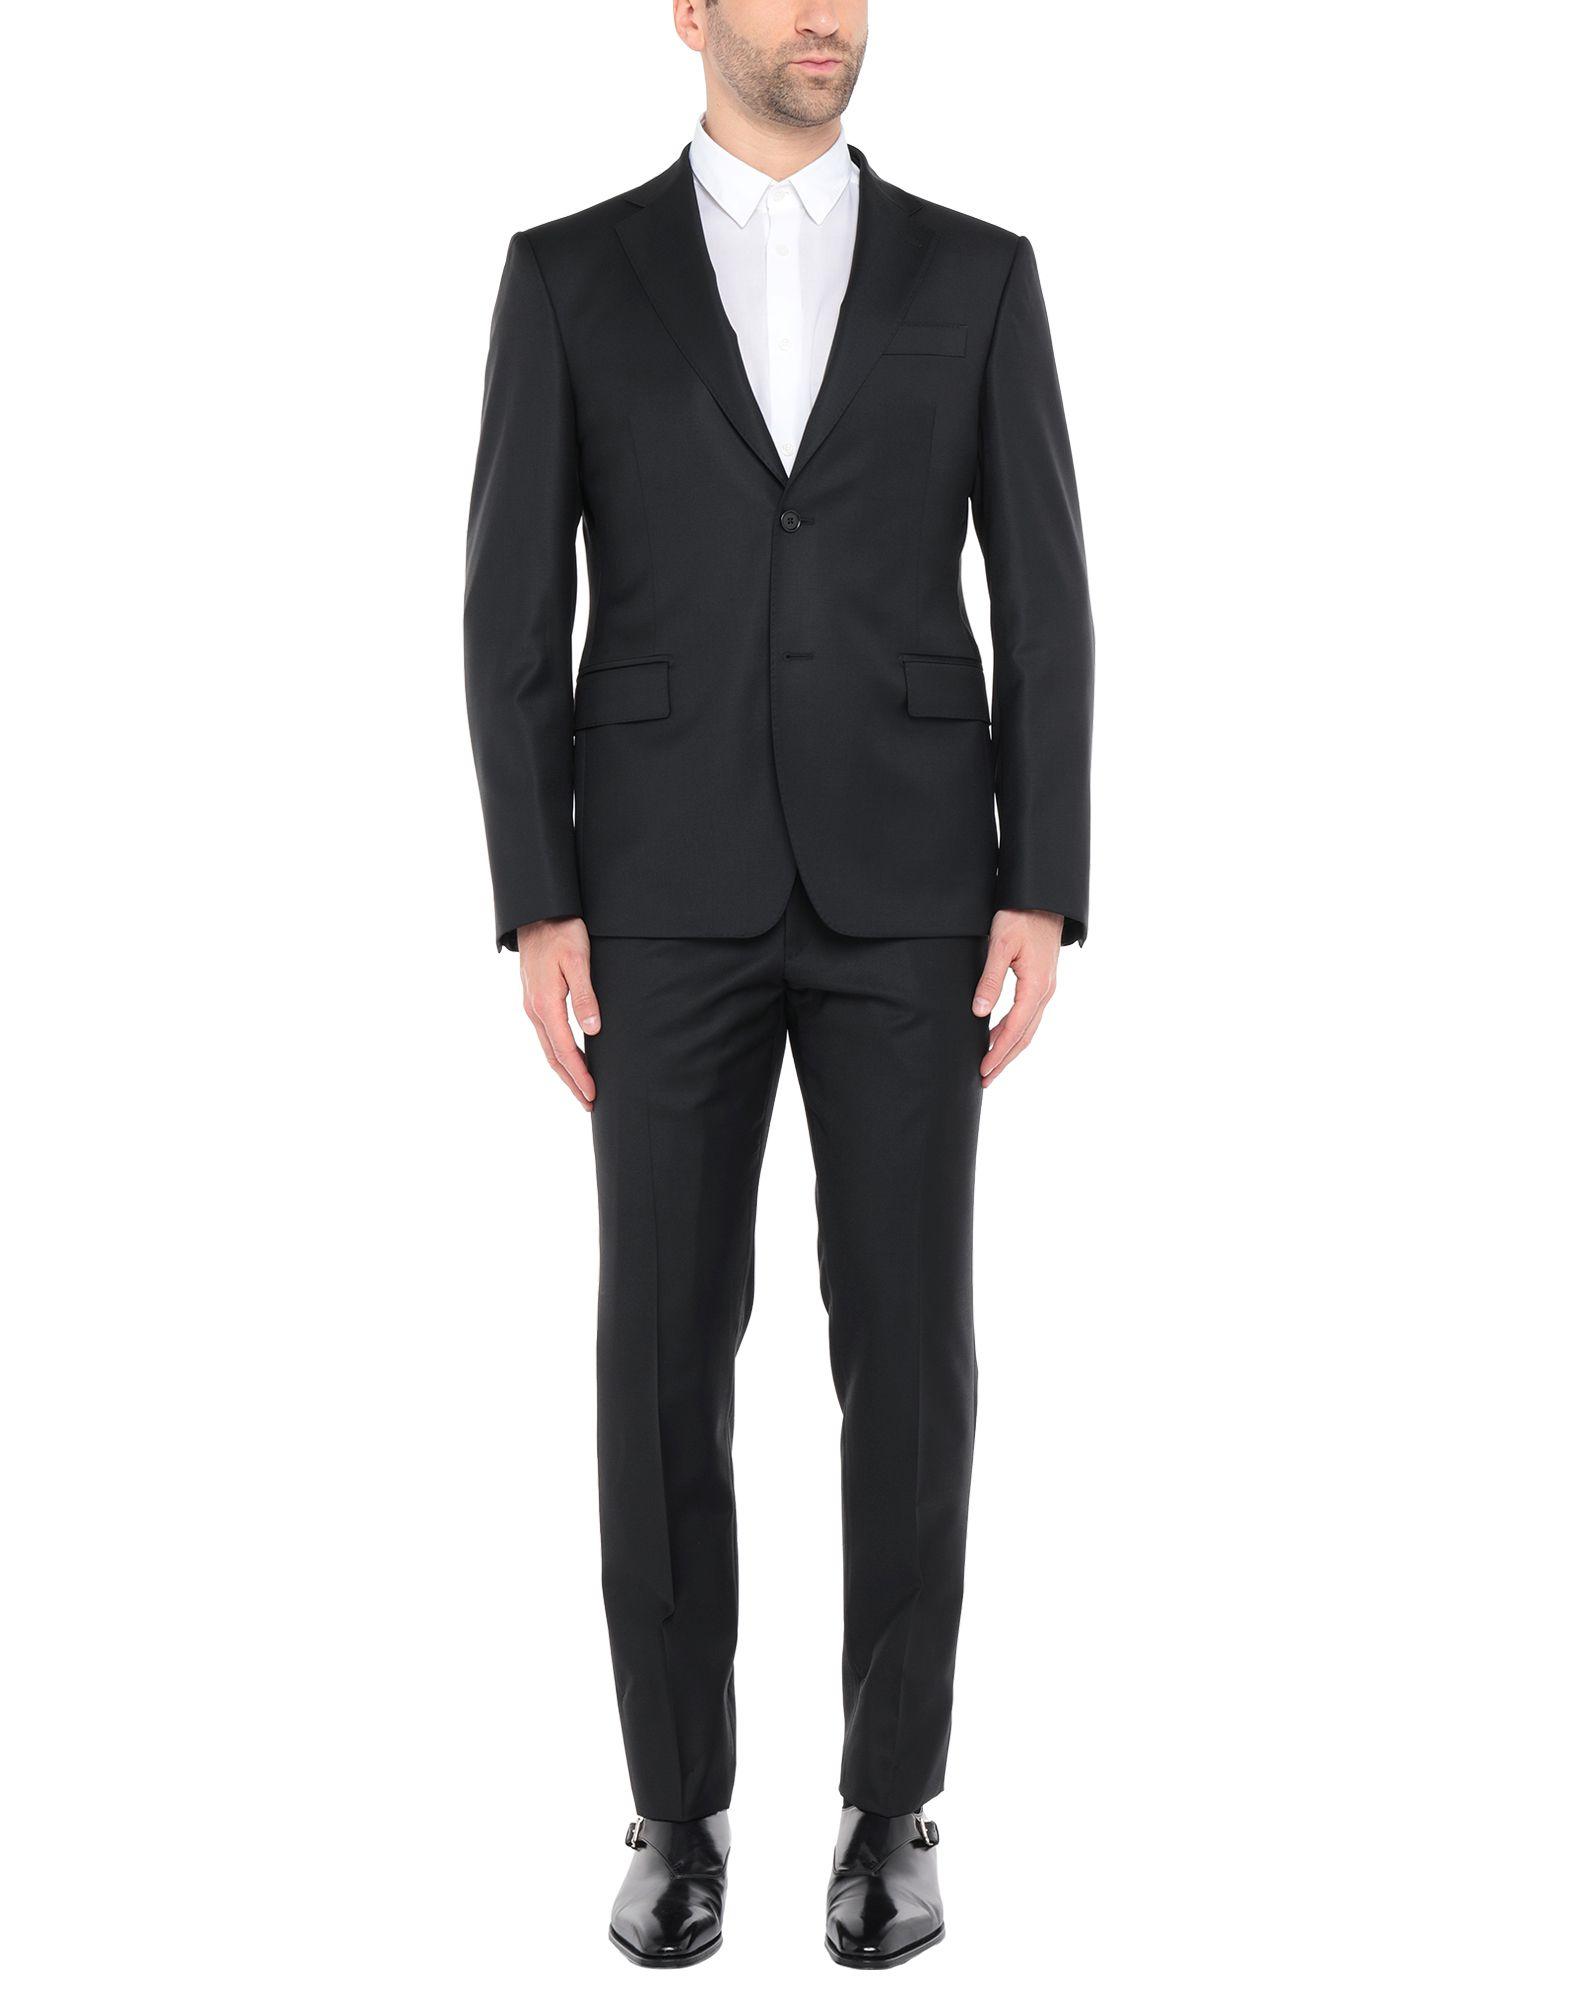 Roberto Cavalli Wool Suit in Black for Men - Lyst